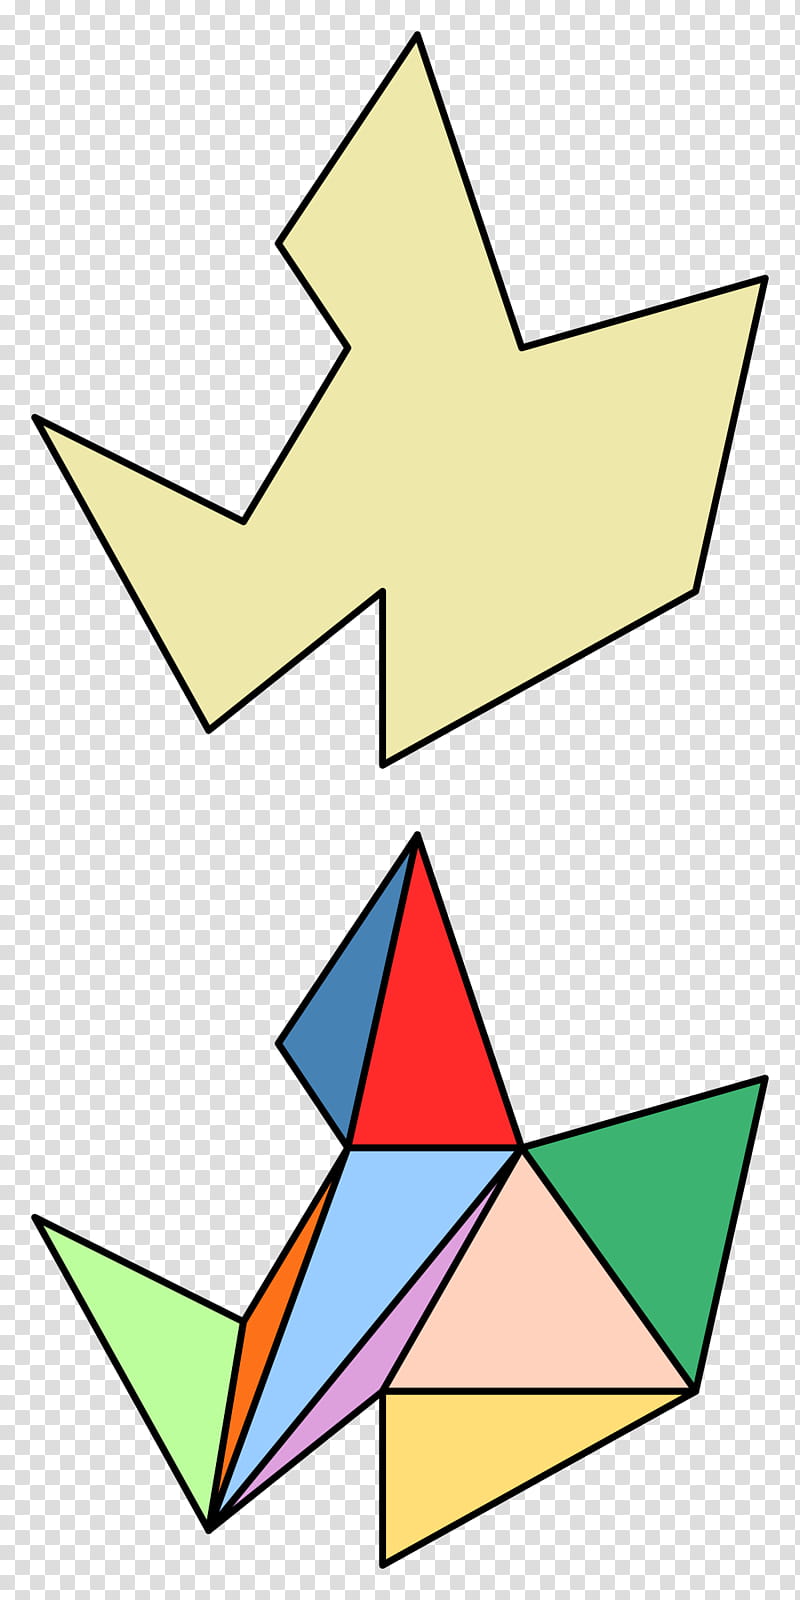 Leaf Line, Area, Polygon, Polygon Triangulation, Triangle, Regular Polygon, Monotone Polygon, Concave Polygon transparent background PNG clipart